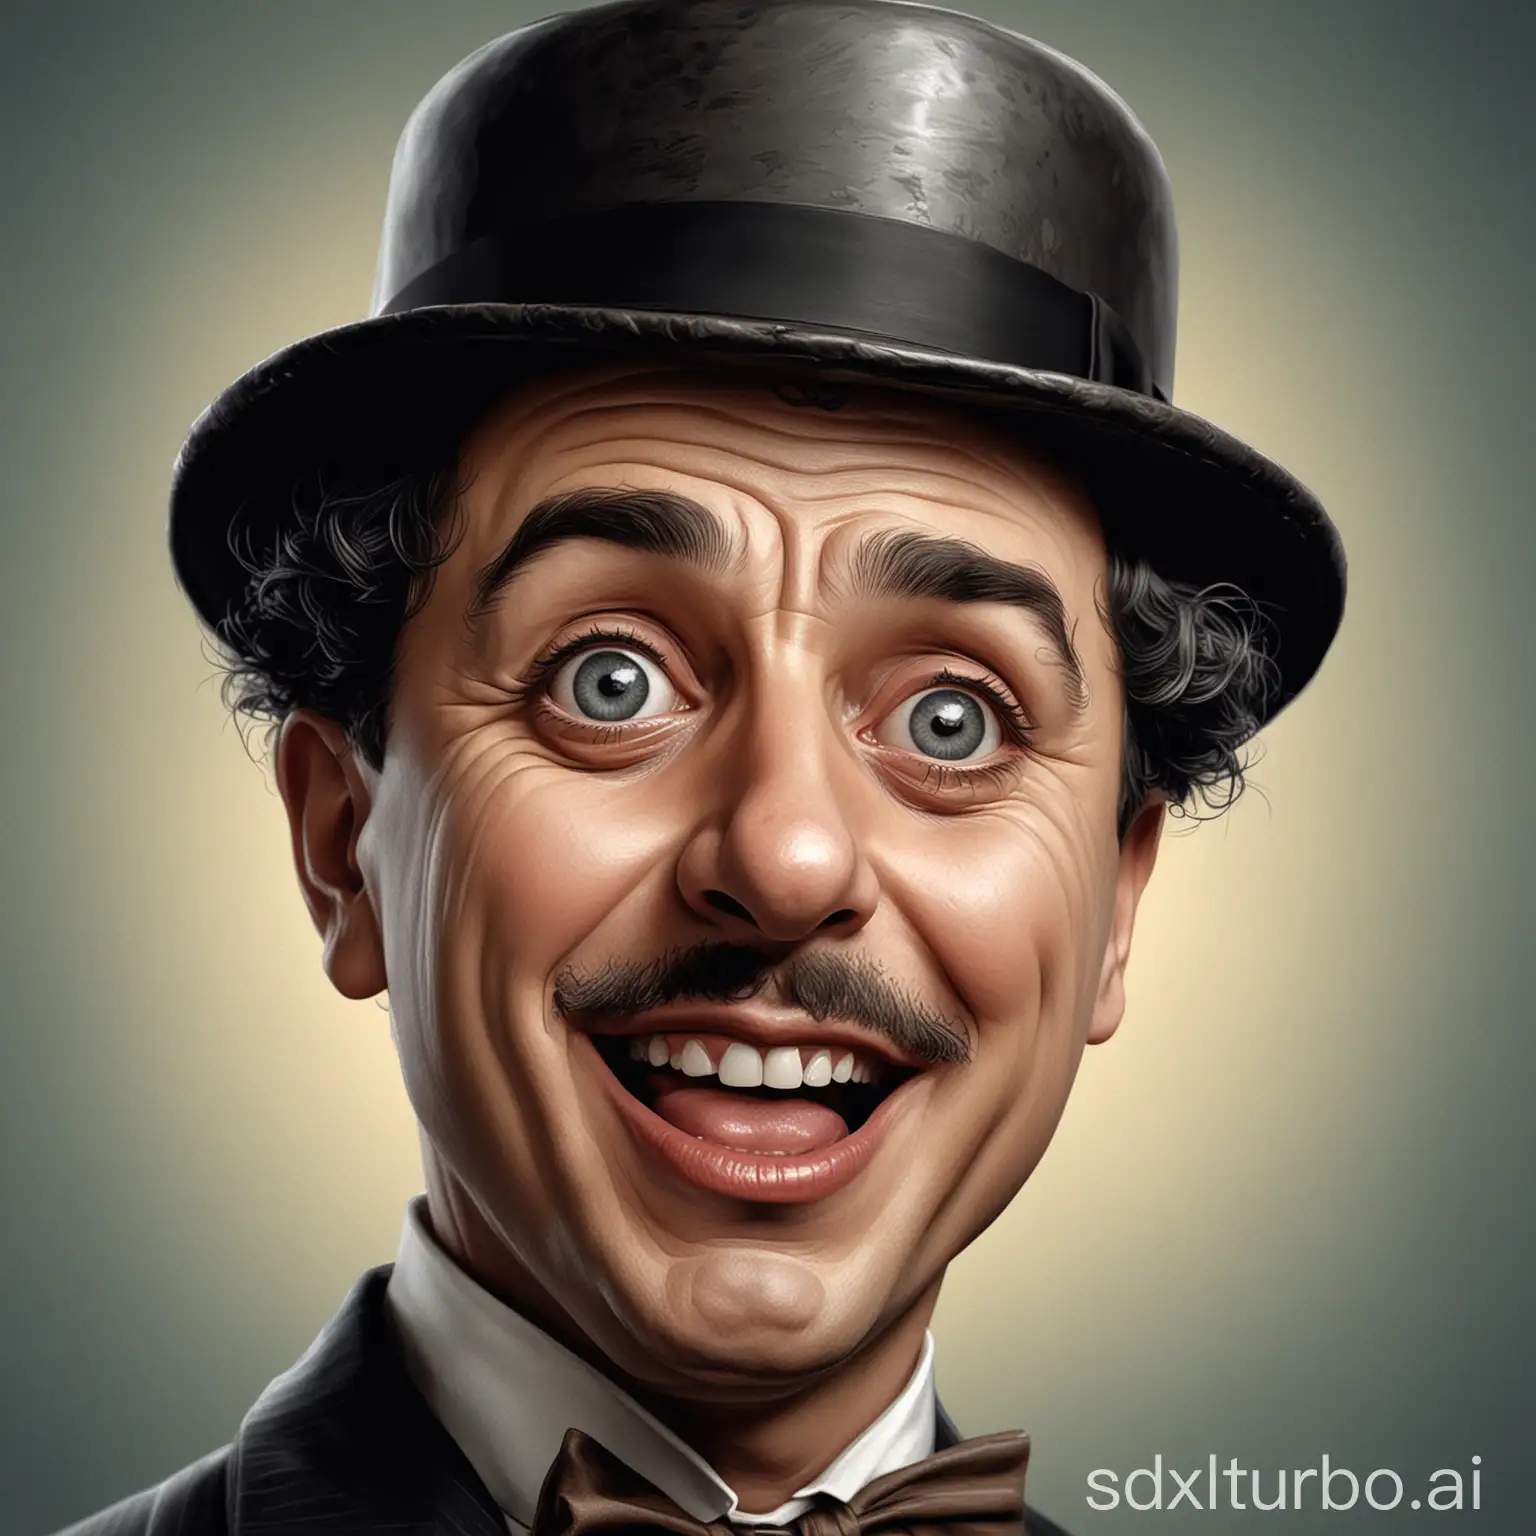 Digital-Art-Caricature-Charles-Chaplin-in-Pop-Surrealism-Style